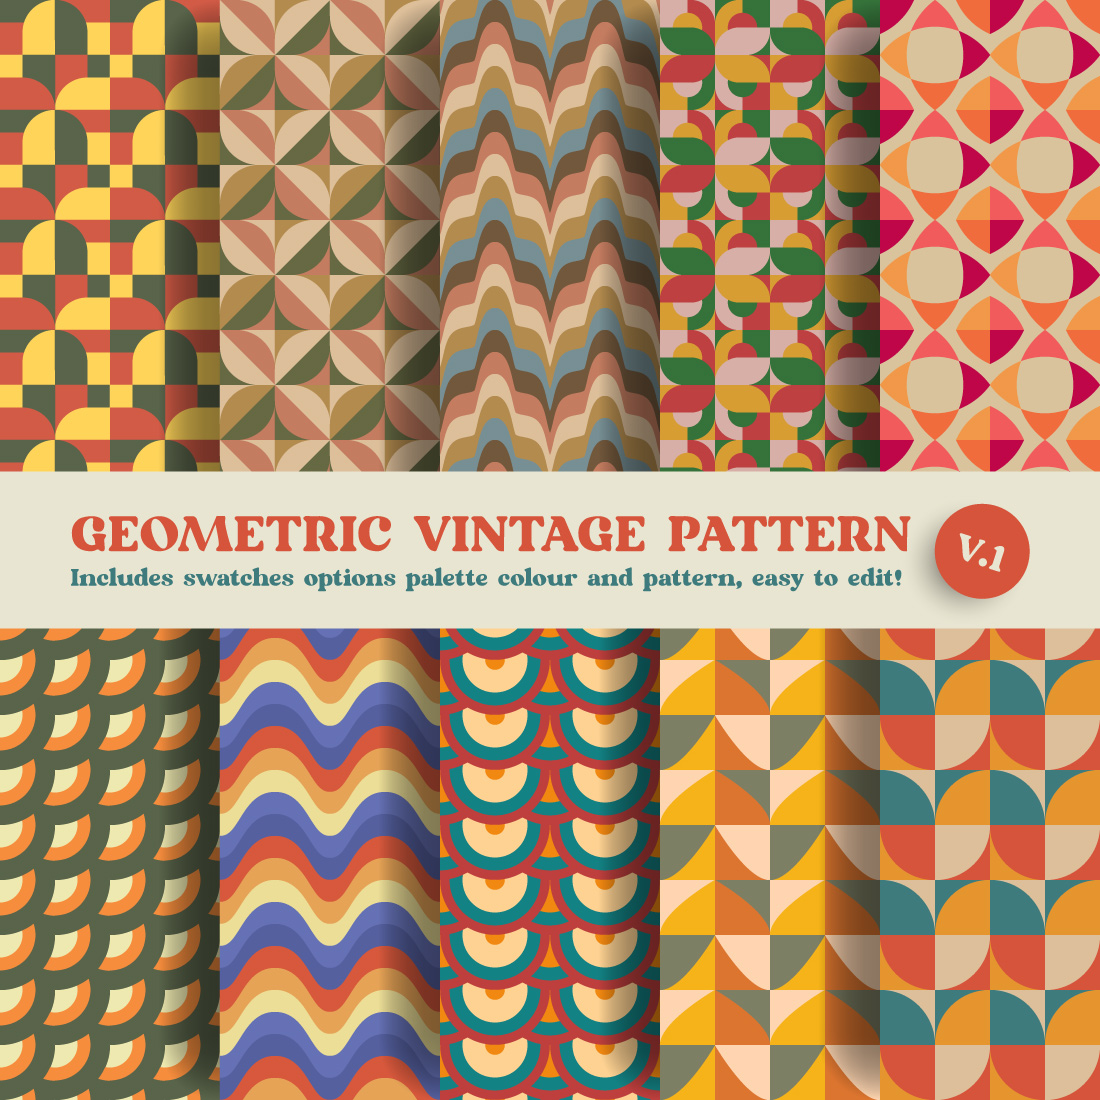 Geometric Vintage Patterns cover image.